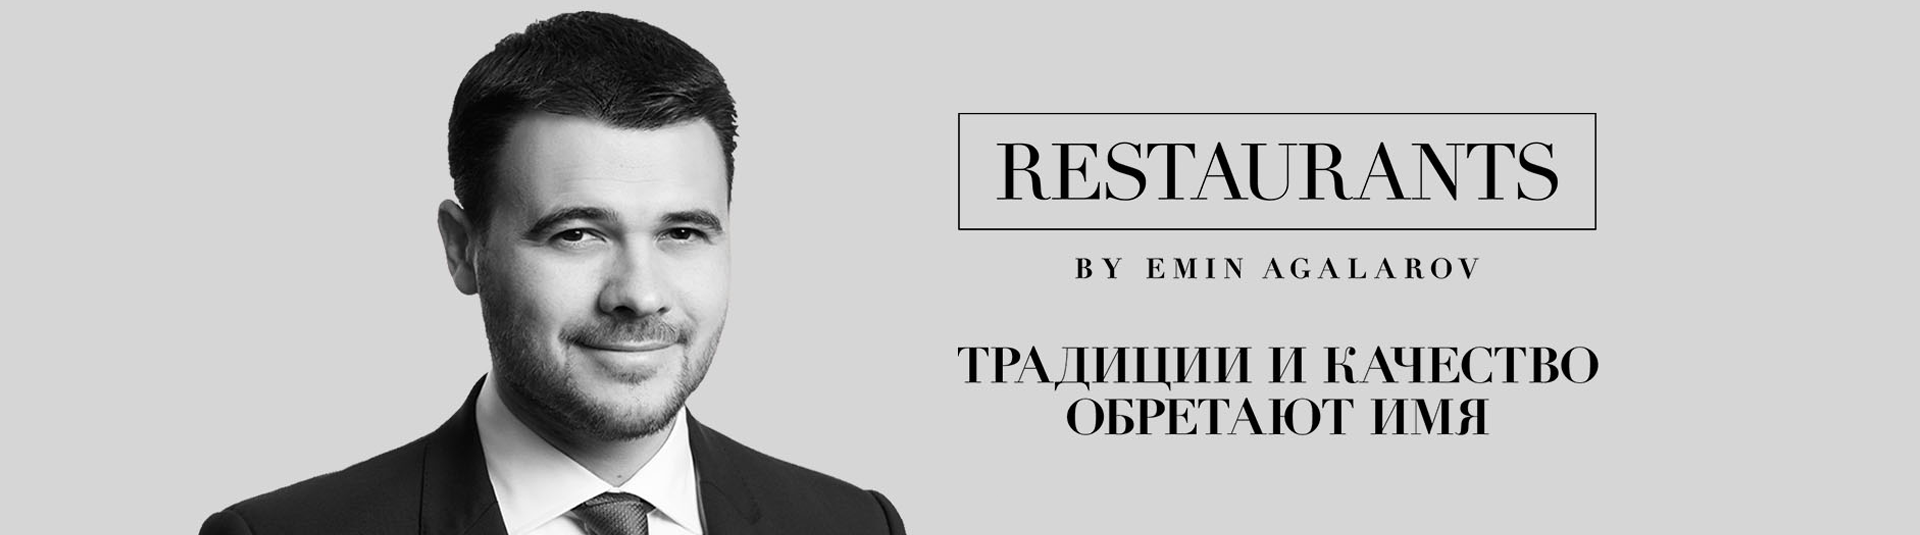 Restaurants by Emin Agalarov – новое имя RbyCG